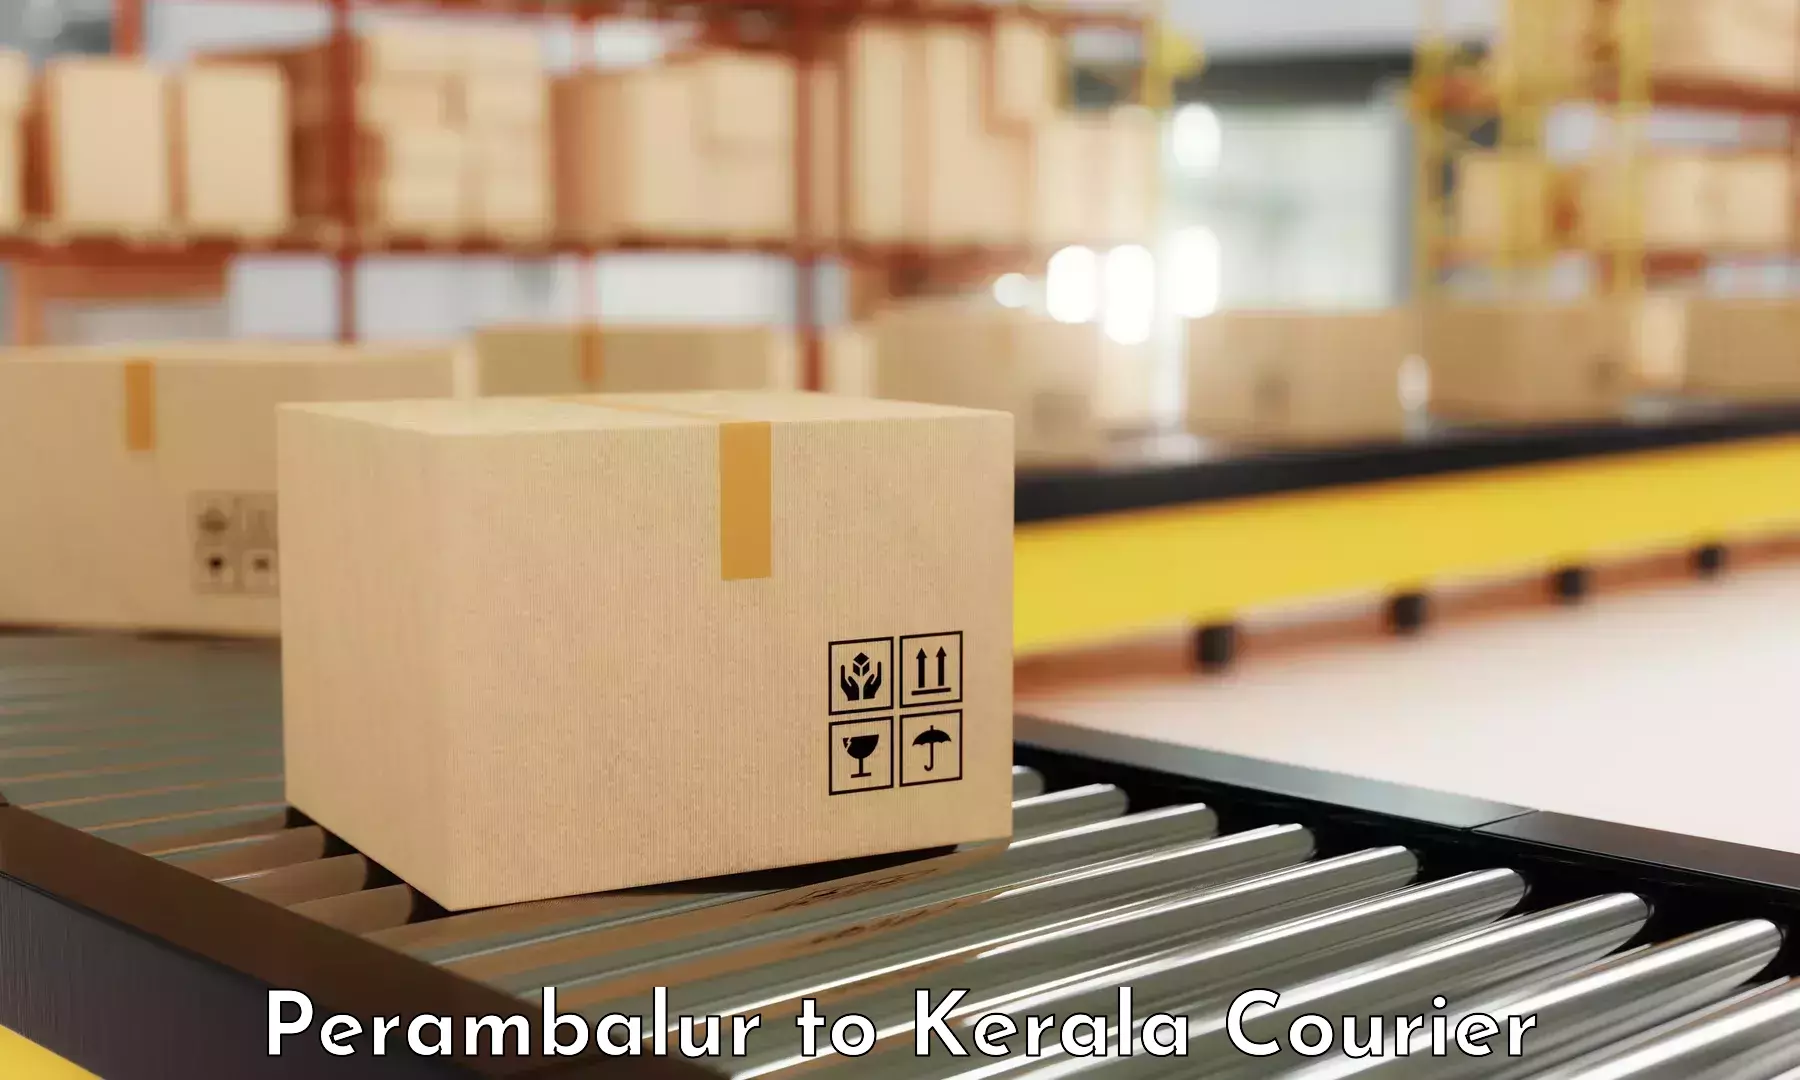 Global logistics network Perambalur to Kattappana